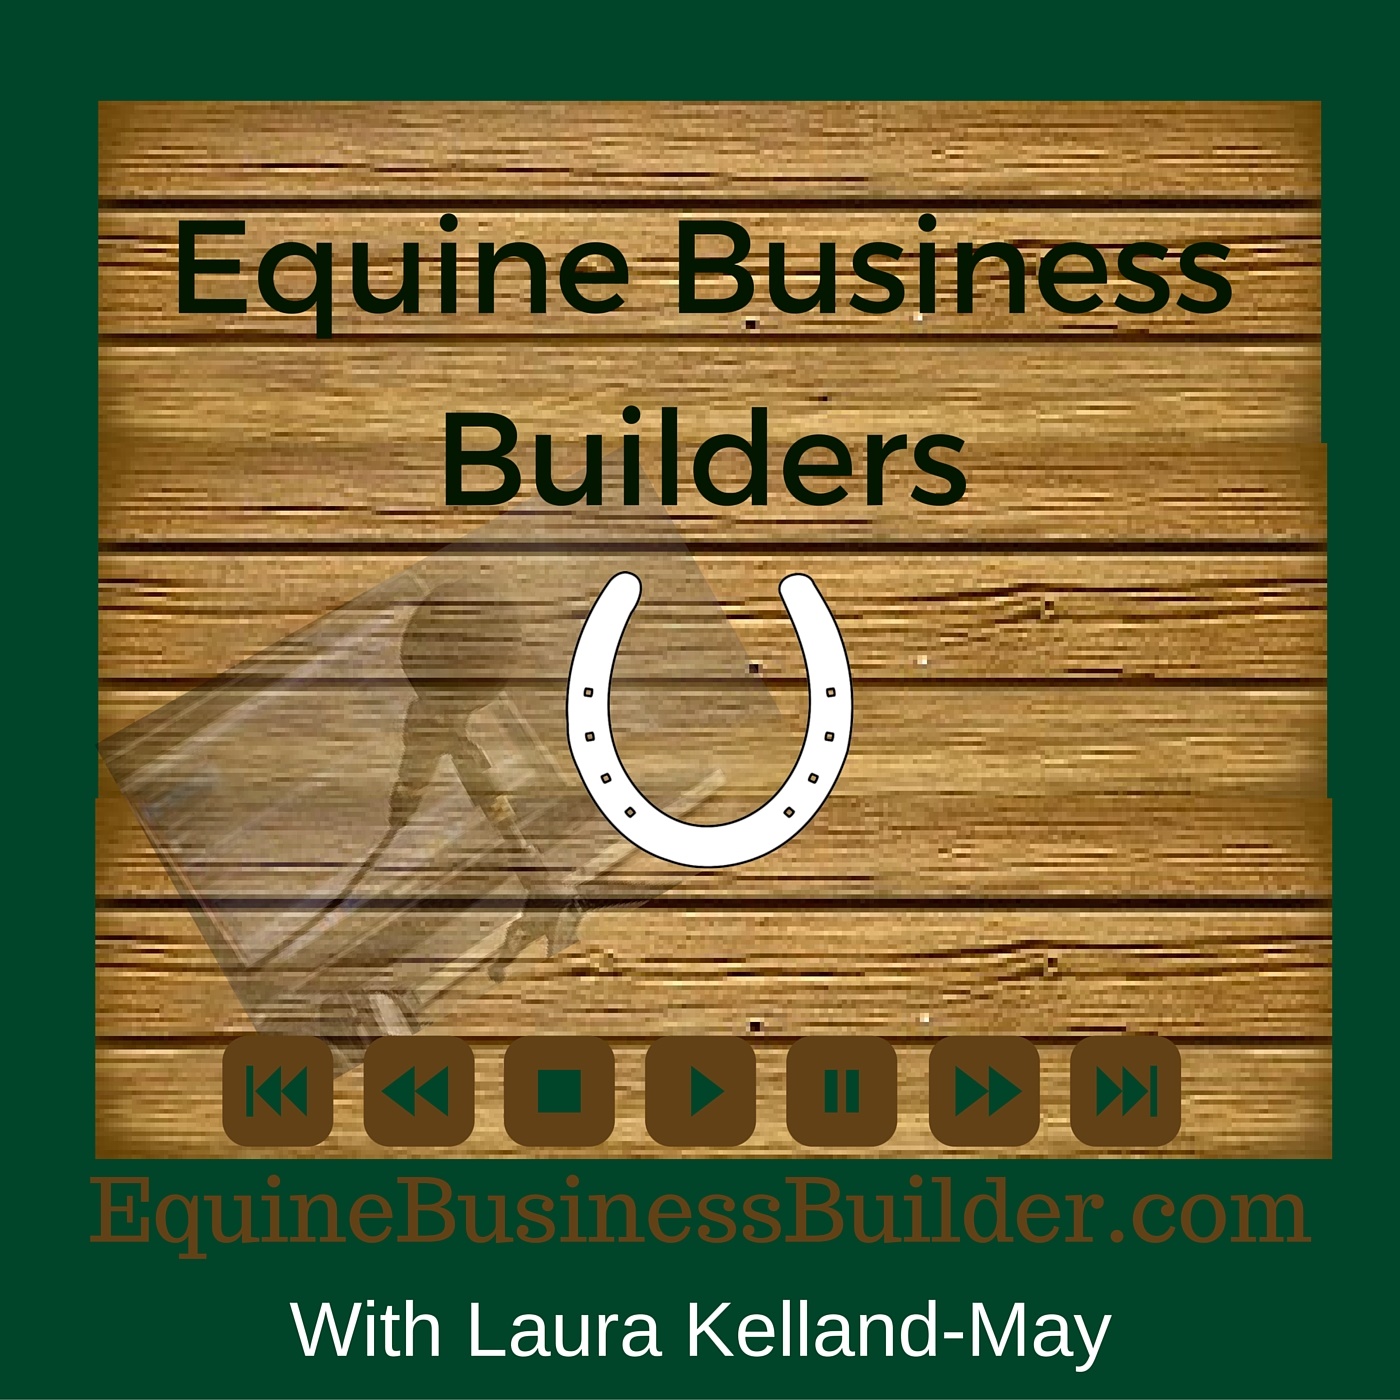 Equine Business Builders - Common Sense Business Solutions for Equestrian Entrepreneurs